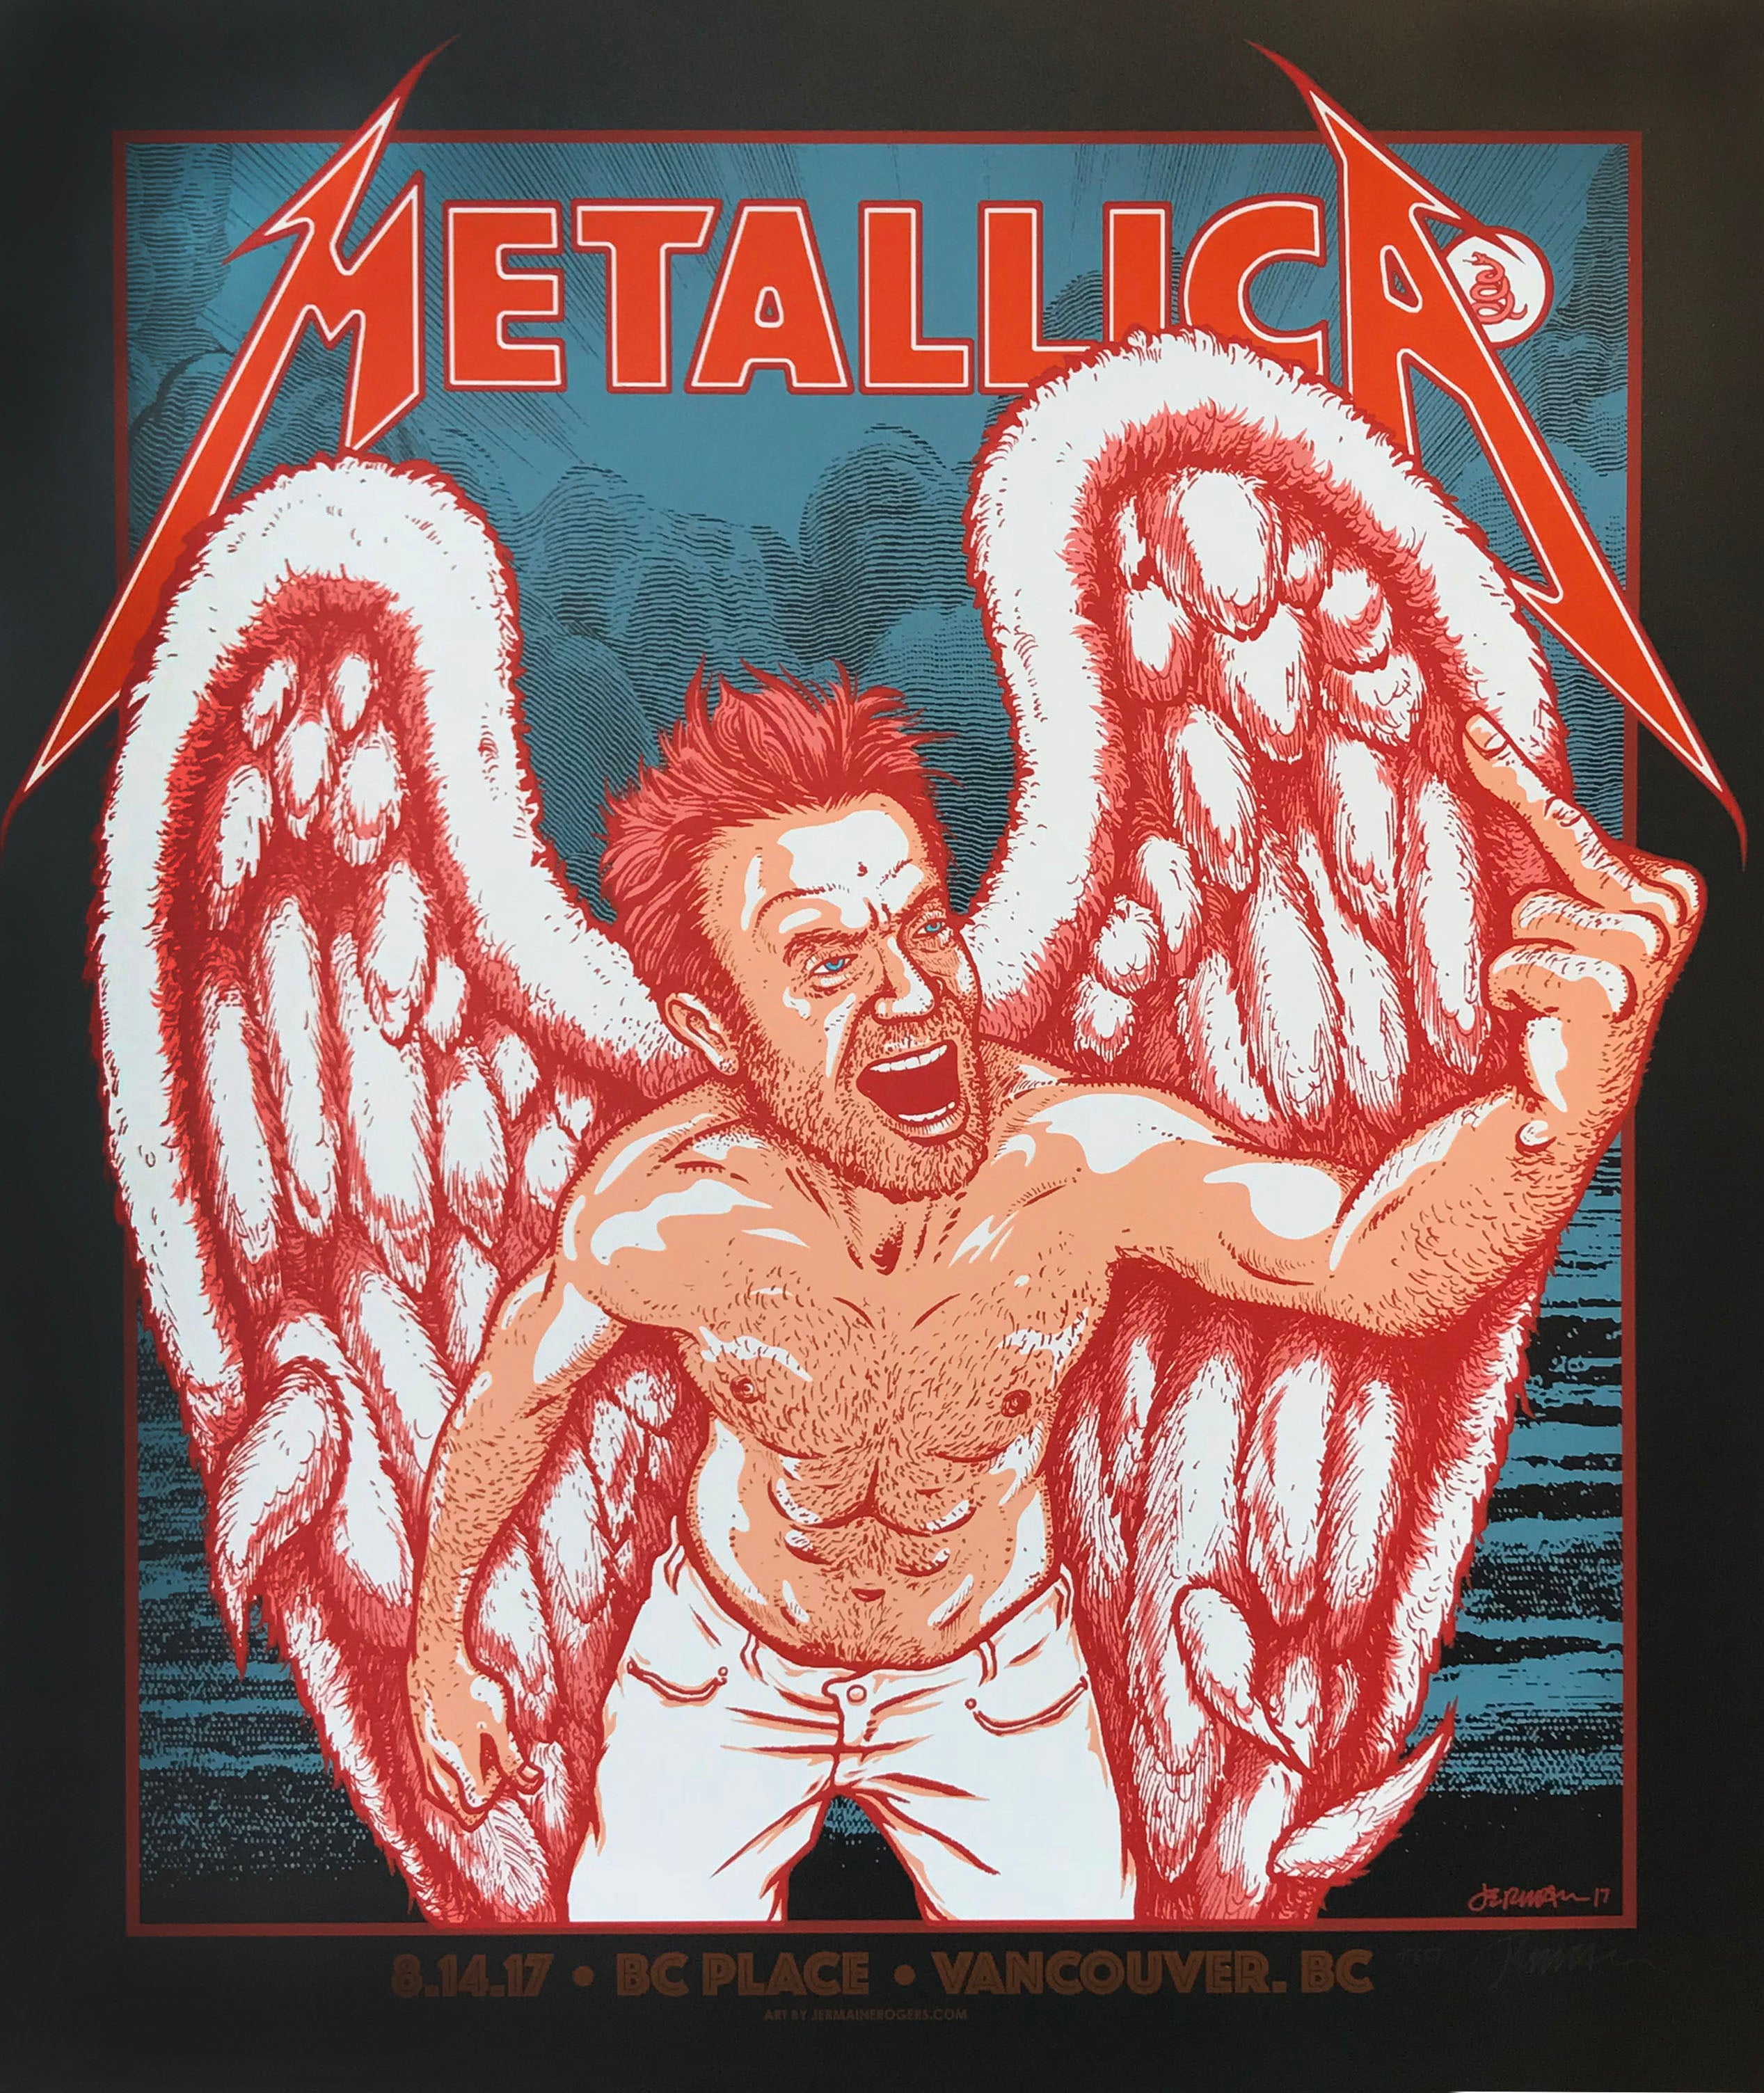 Metallica - Vancouver, BC - 8.14.17 TEST